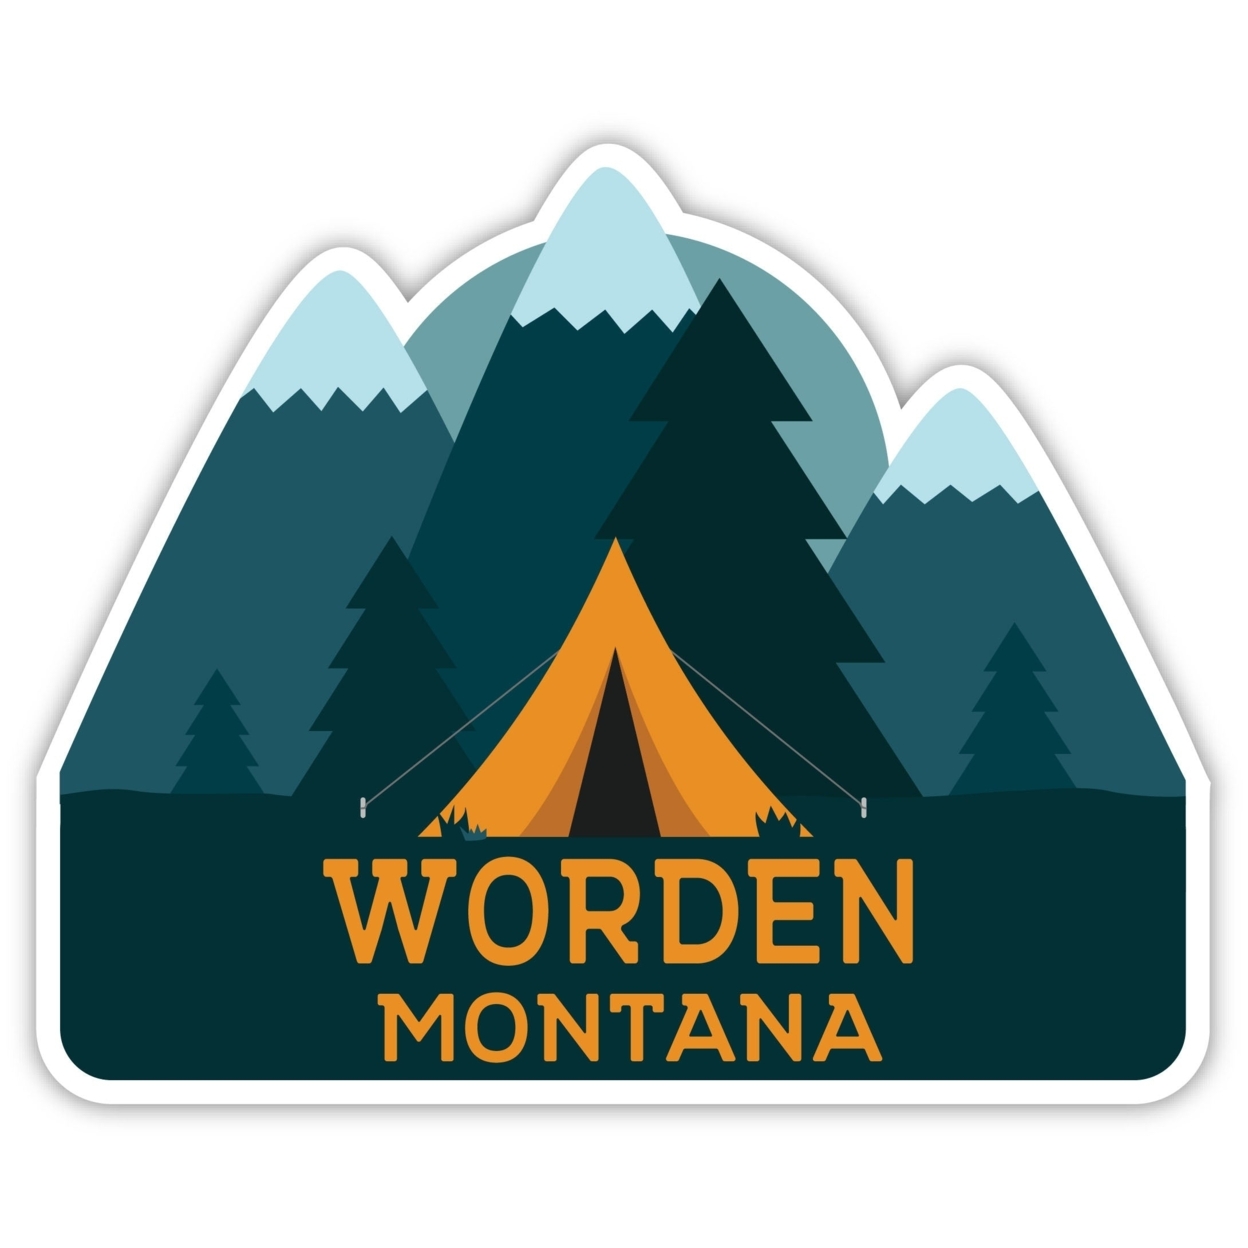 Worden Montana Souvenir Decorative Stickers (Choose Theme And Size) - Single Unit, 2-Inch, Tent